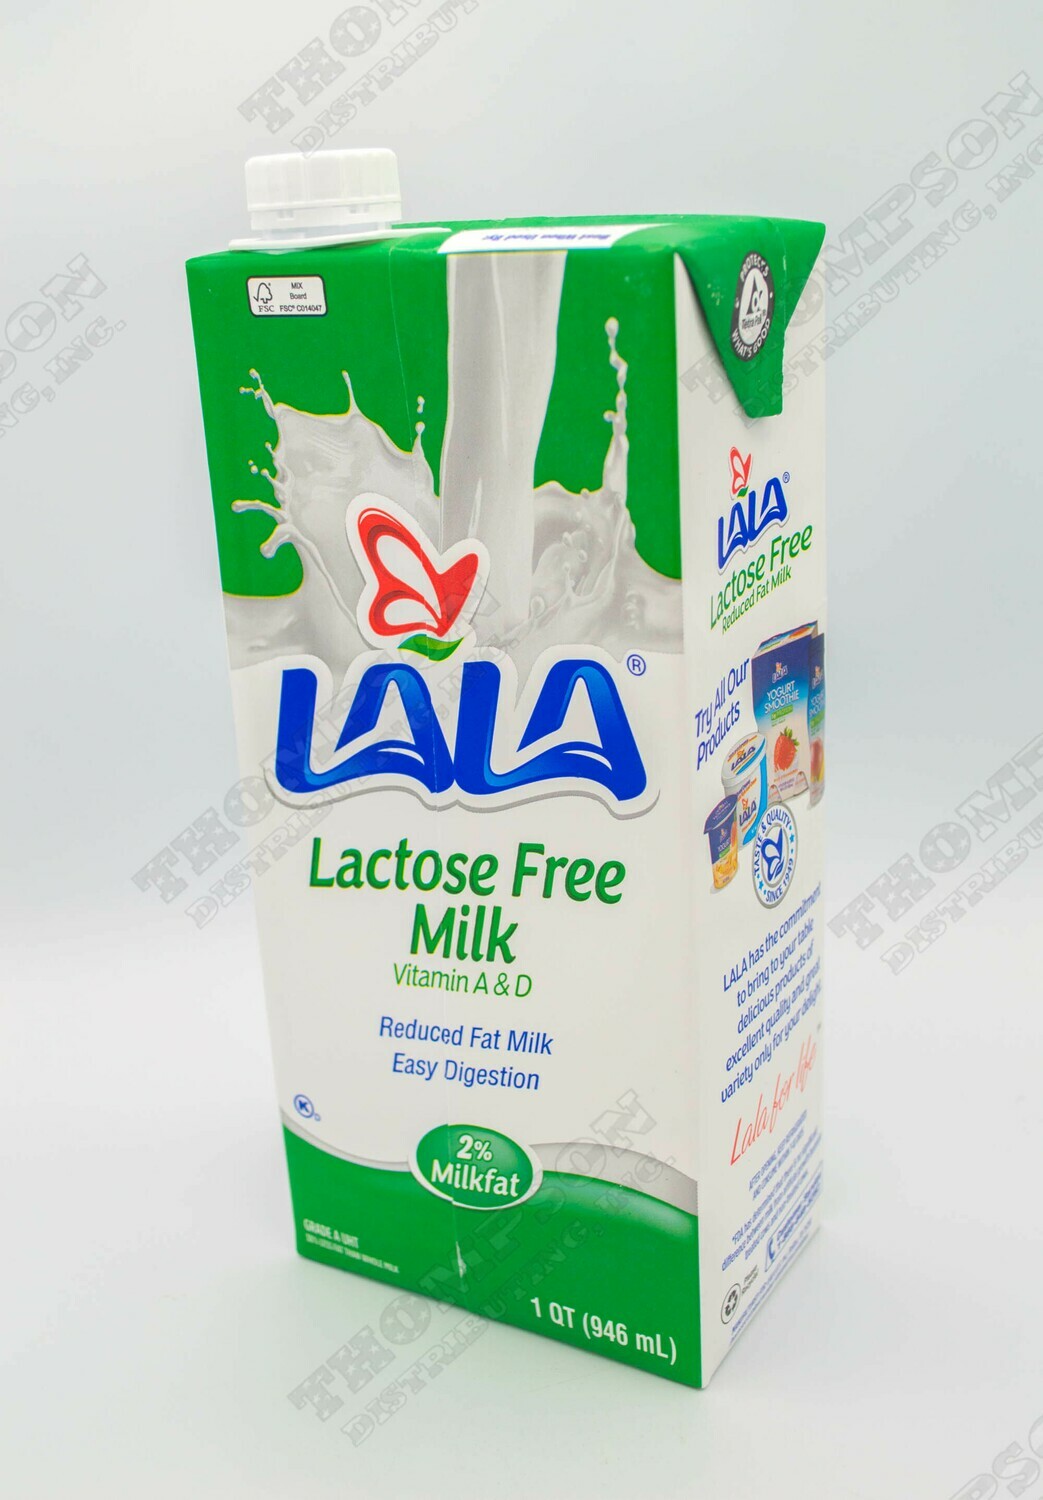 LALA- 2% Milk Lactose free